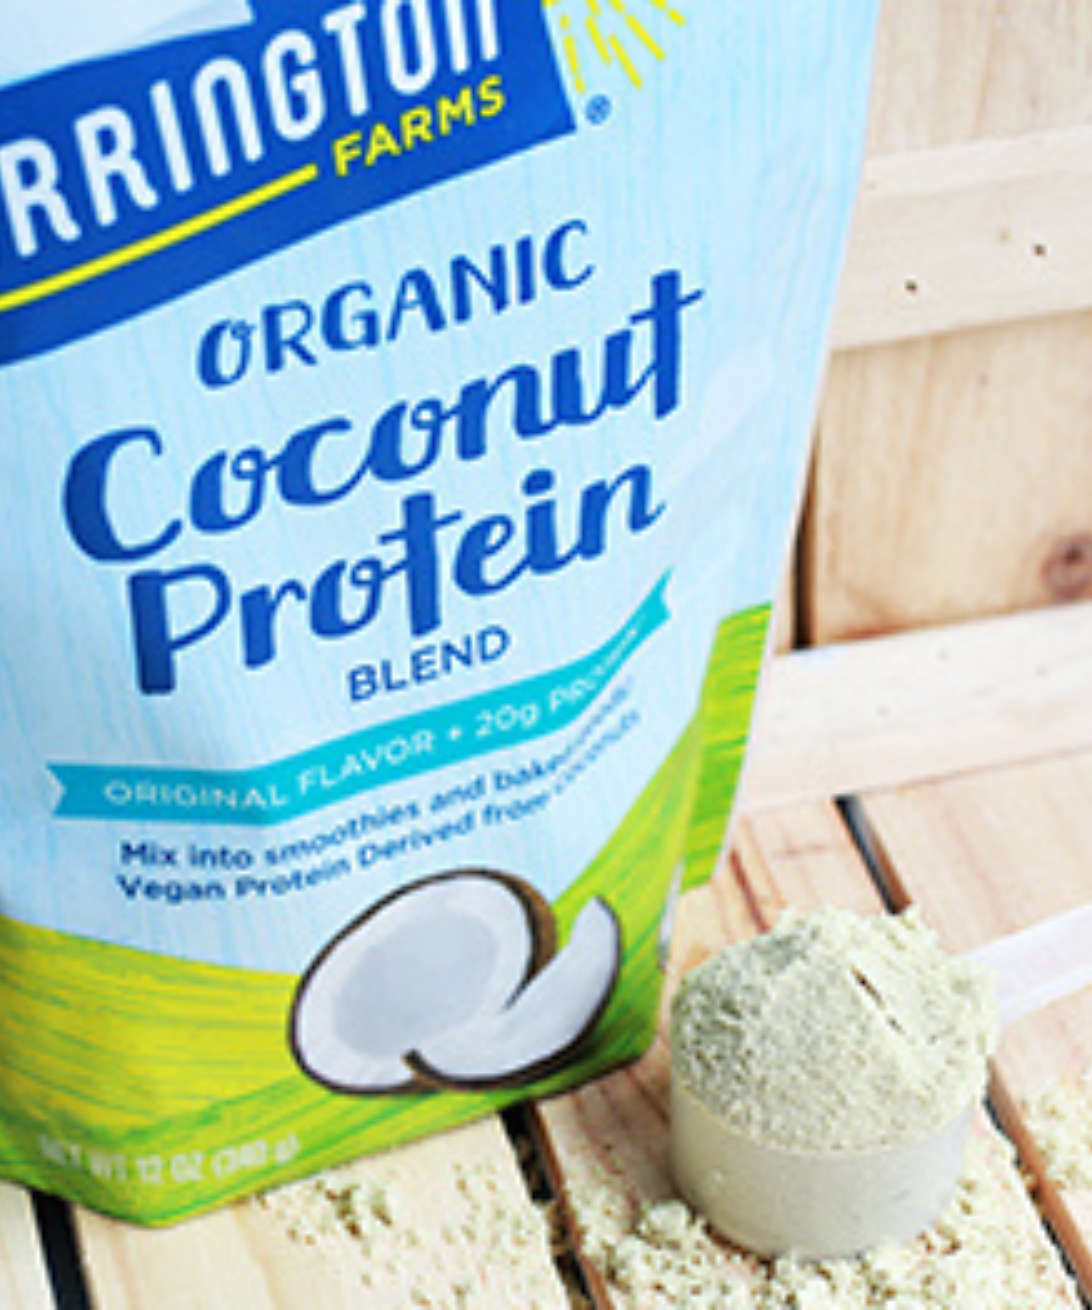 Why I love Carrington Farms Coconut Protein Blend